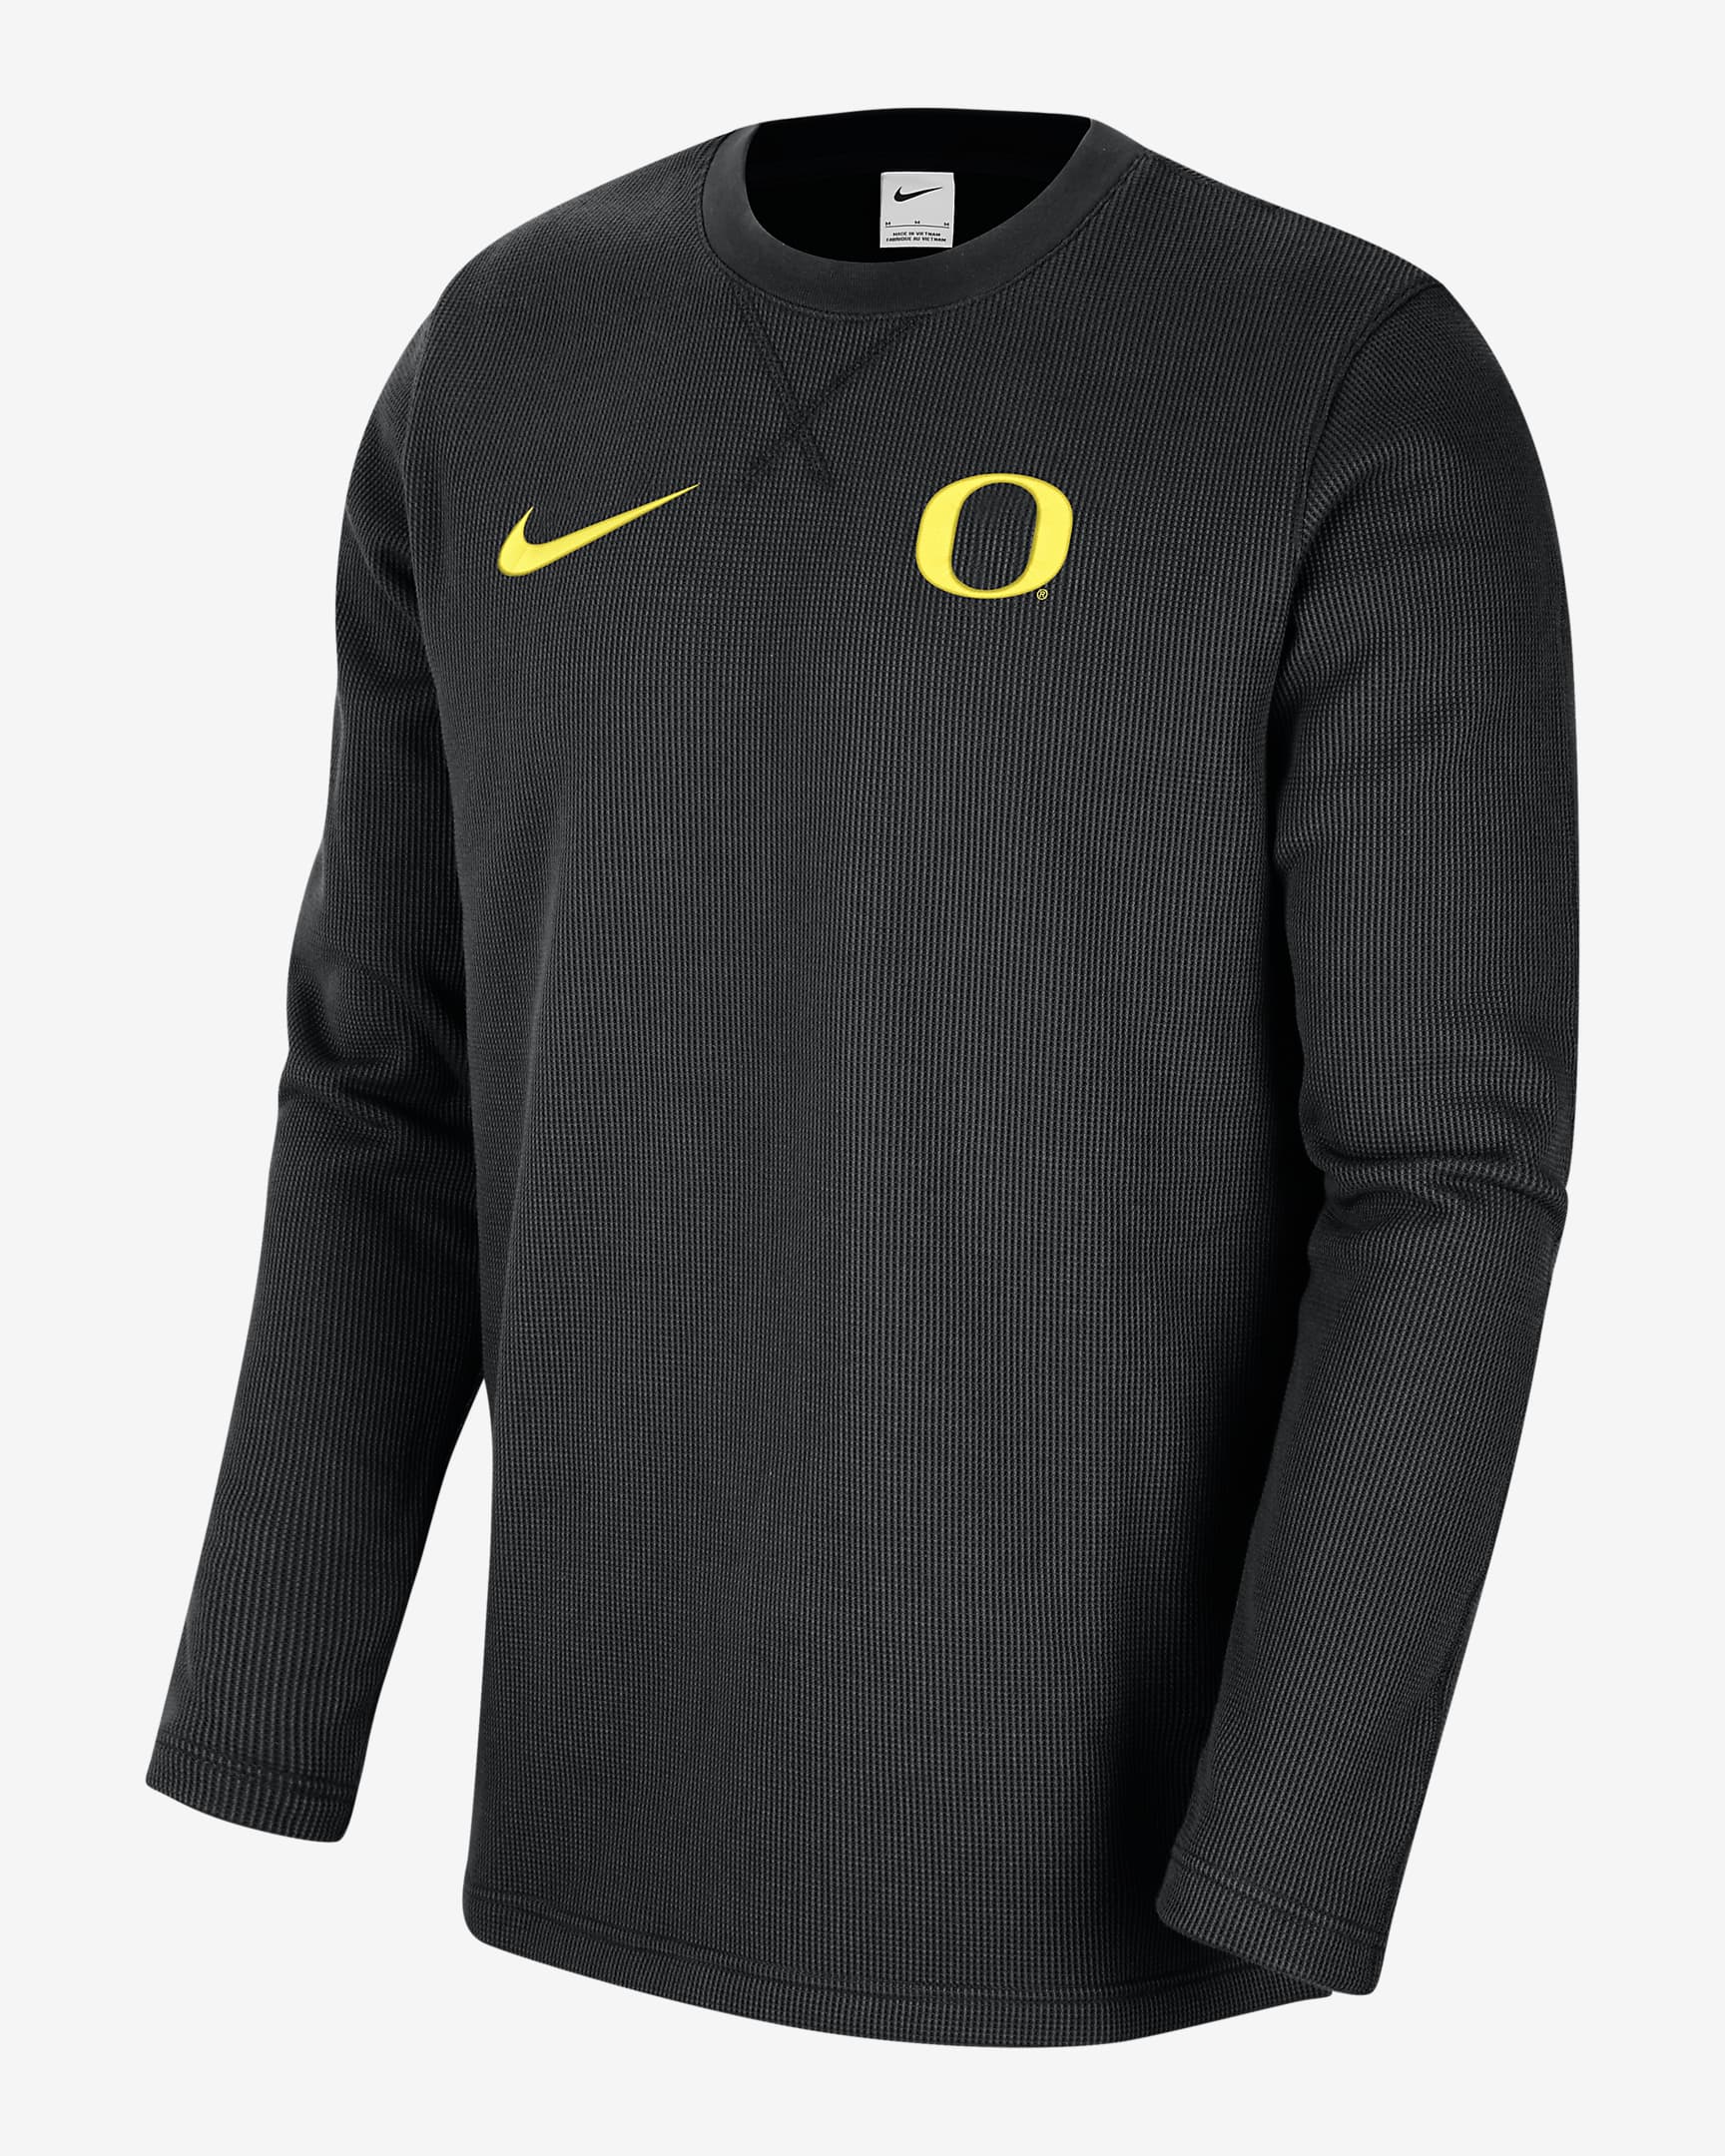 Oregon Men's Nike College Long-Sleeve Top. Nike.com